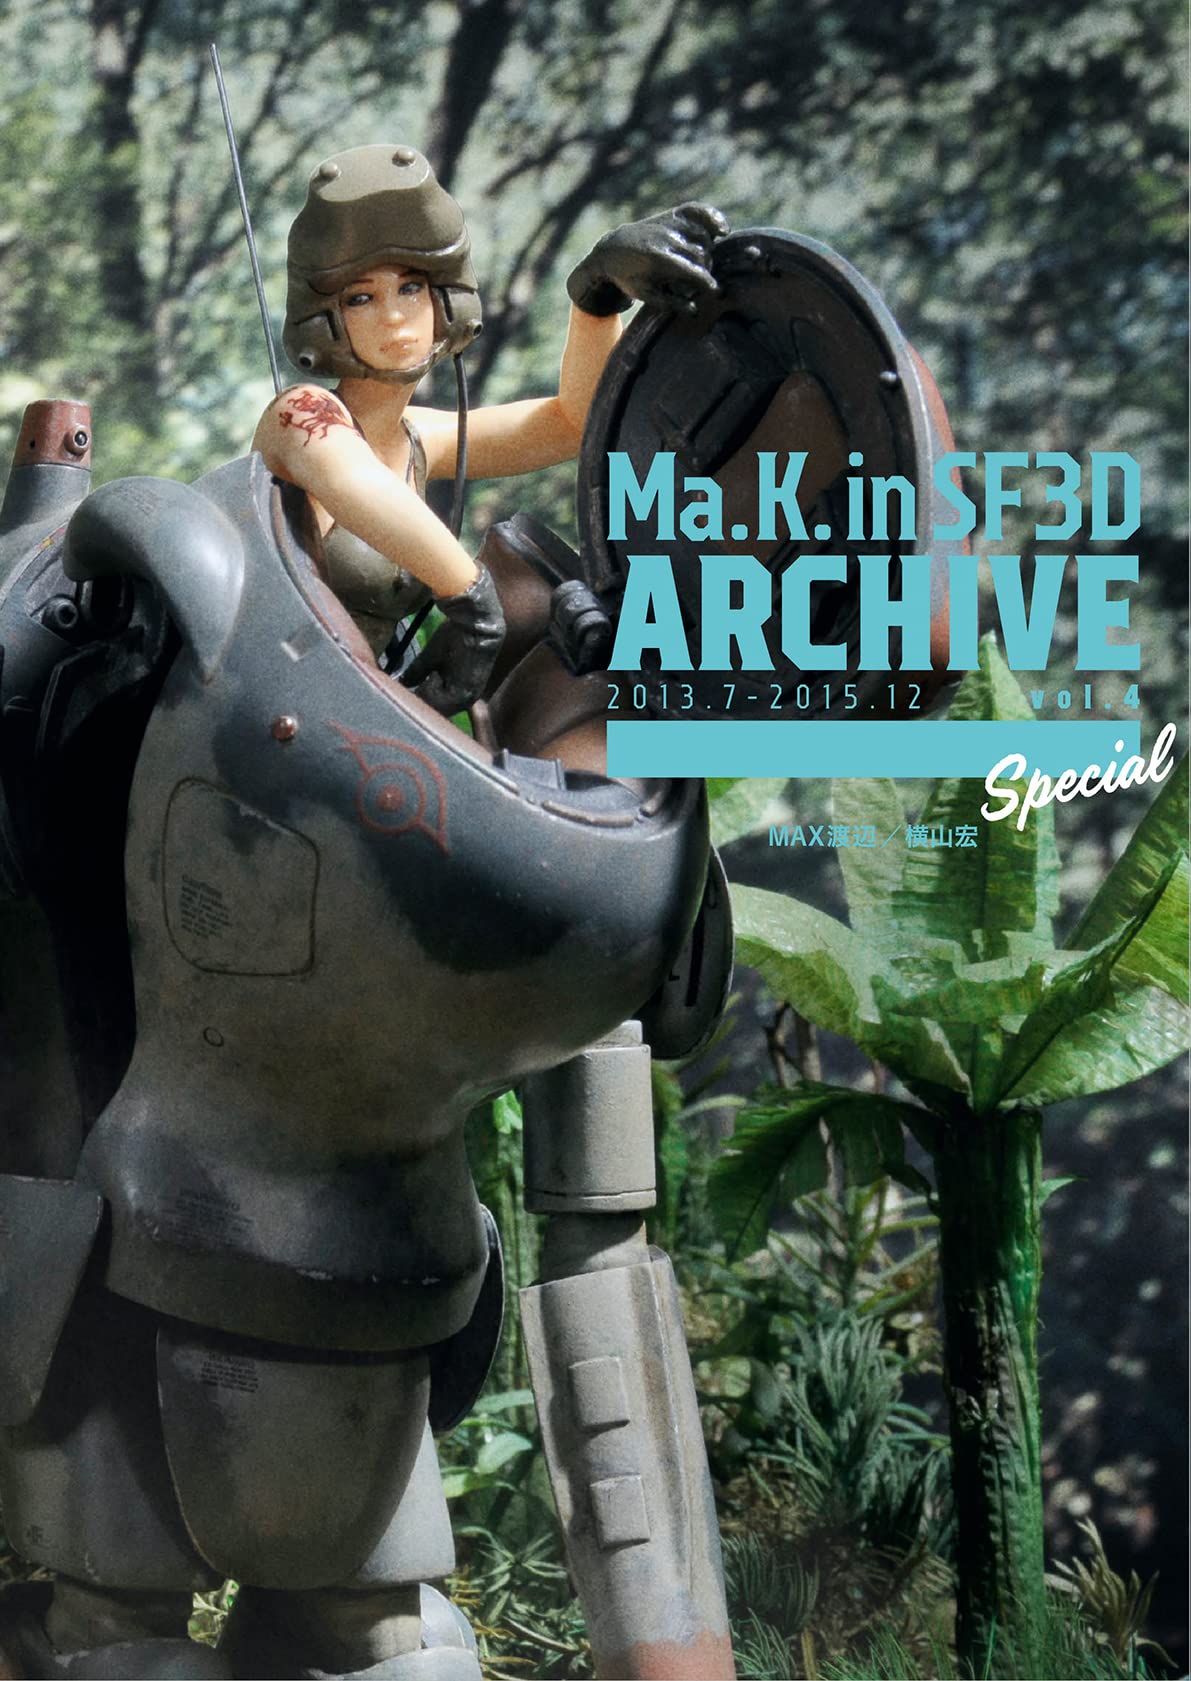 Max Watanabe, Ko Yokoyama "Ma.K. in SF3D ARCHIVE Special 2013.7-2015.12 Vol.4 40th Anniversary"